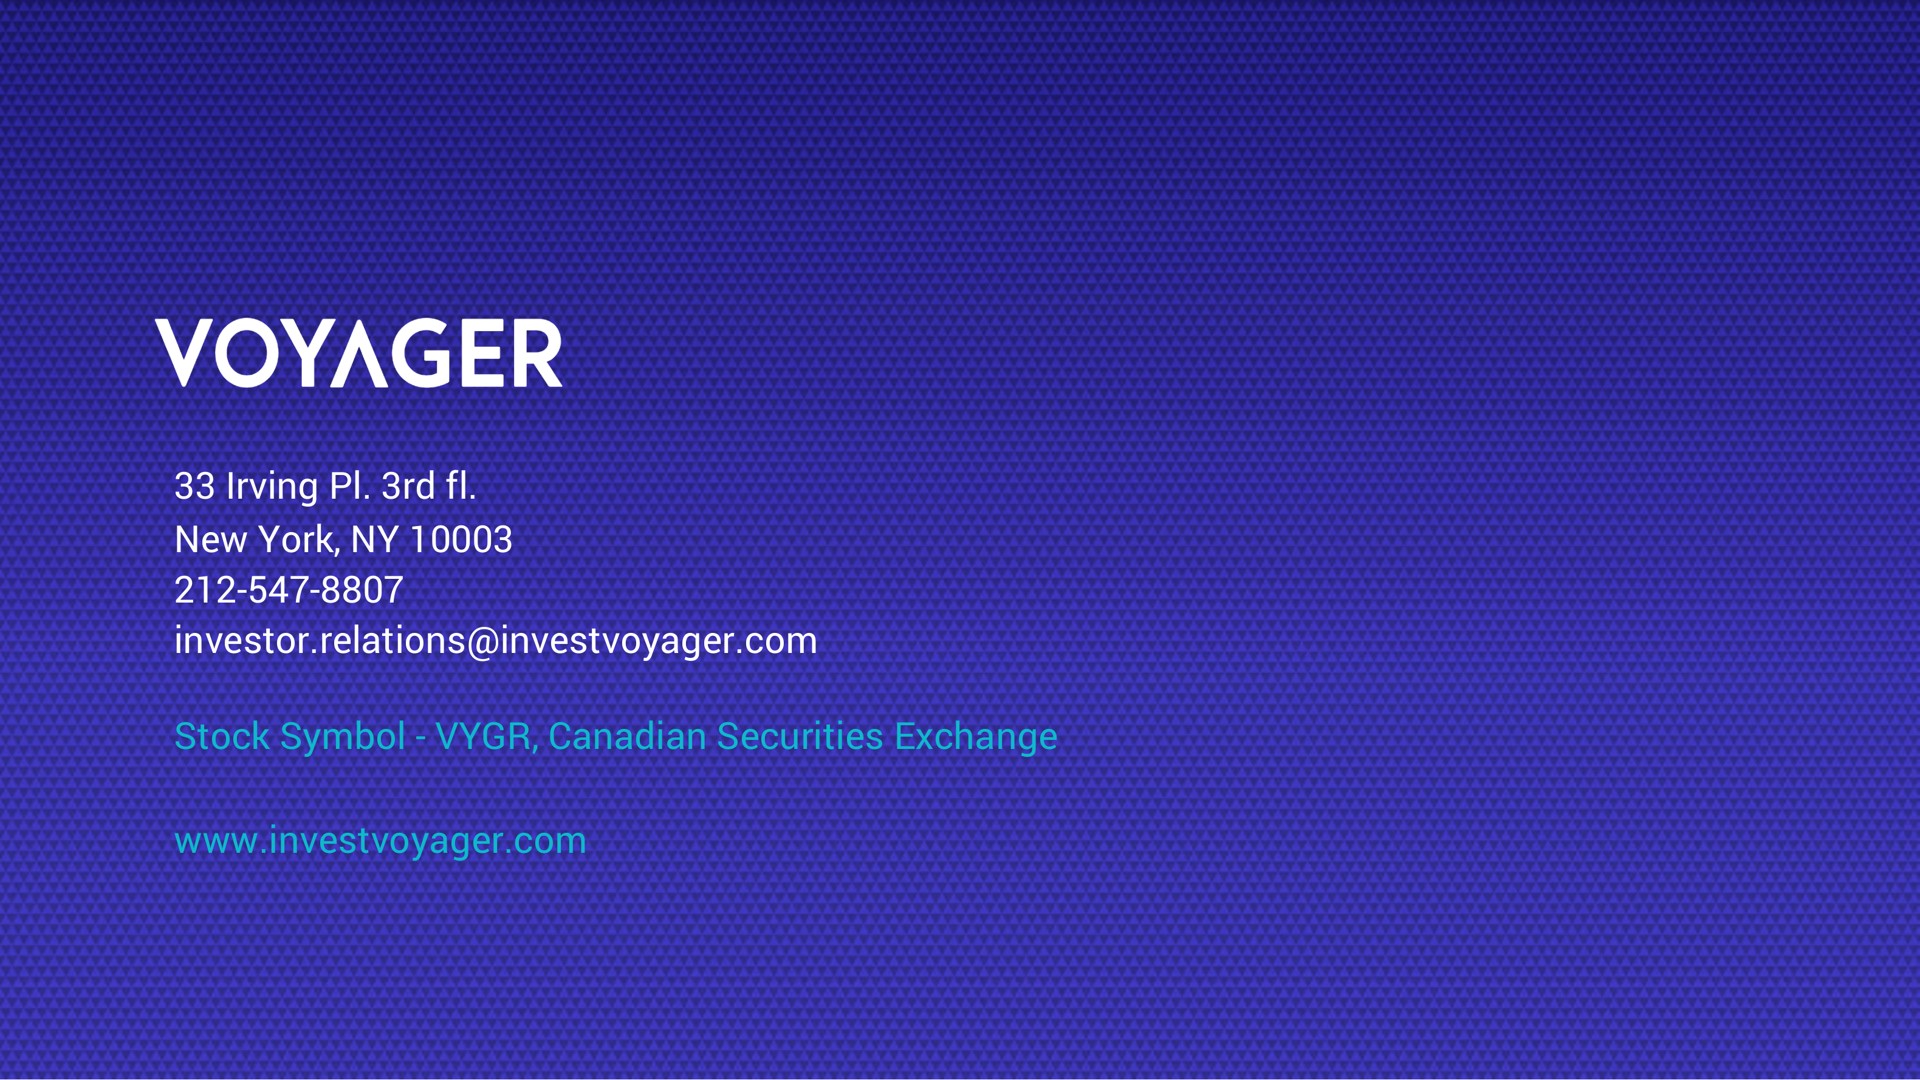 new york investor relations stock symbol securities exchange voyager | Voyager Digital